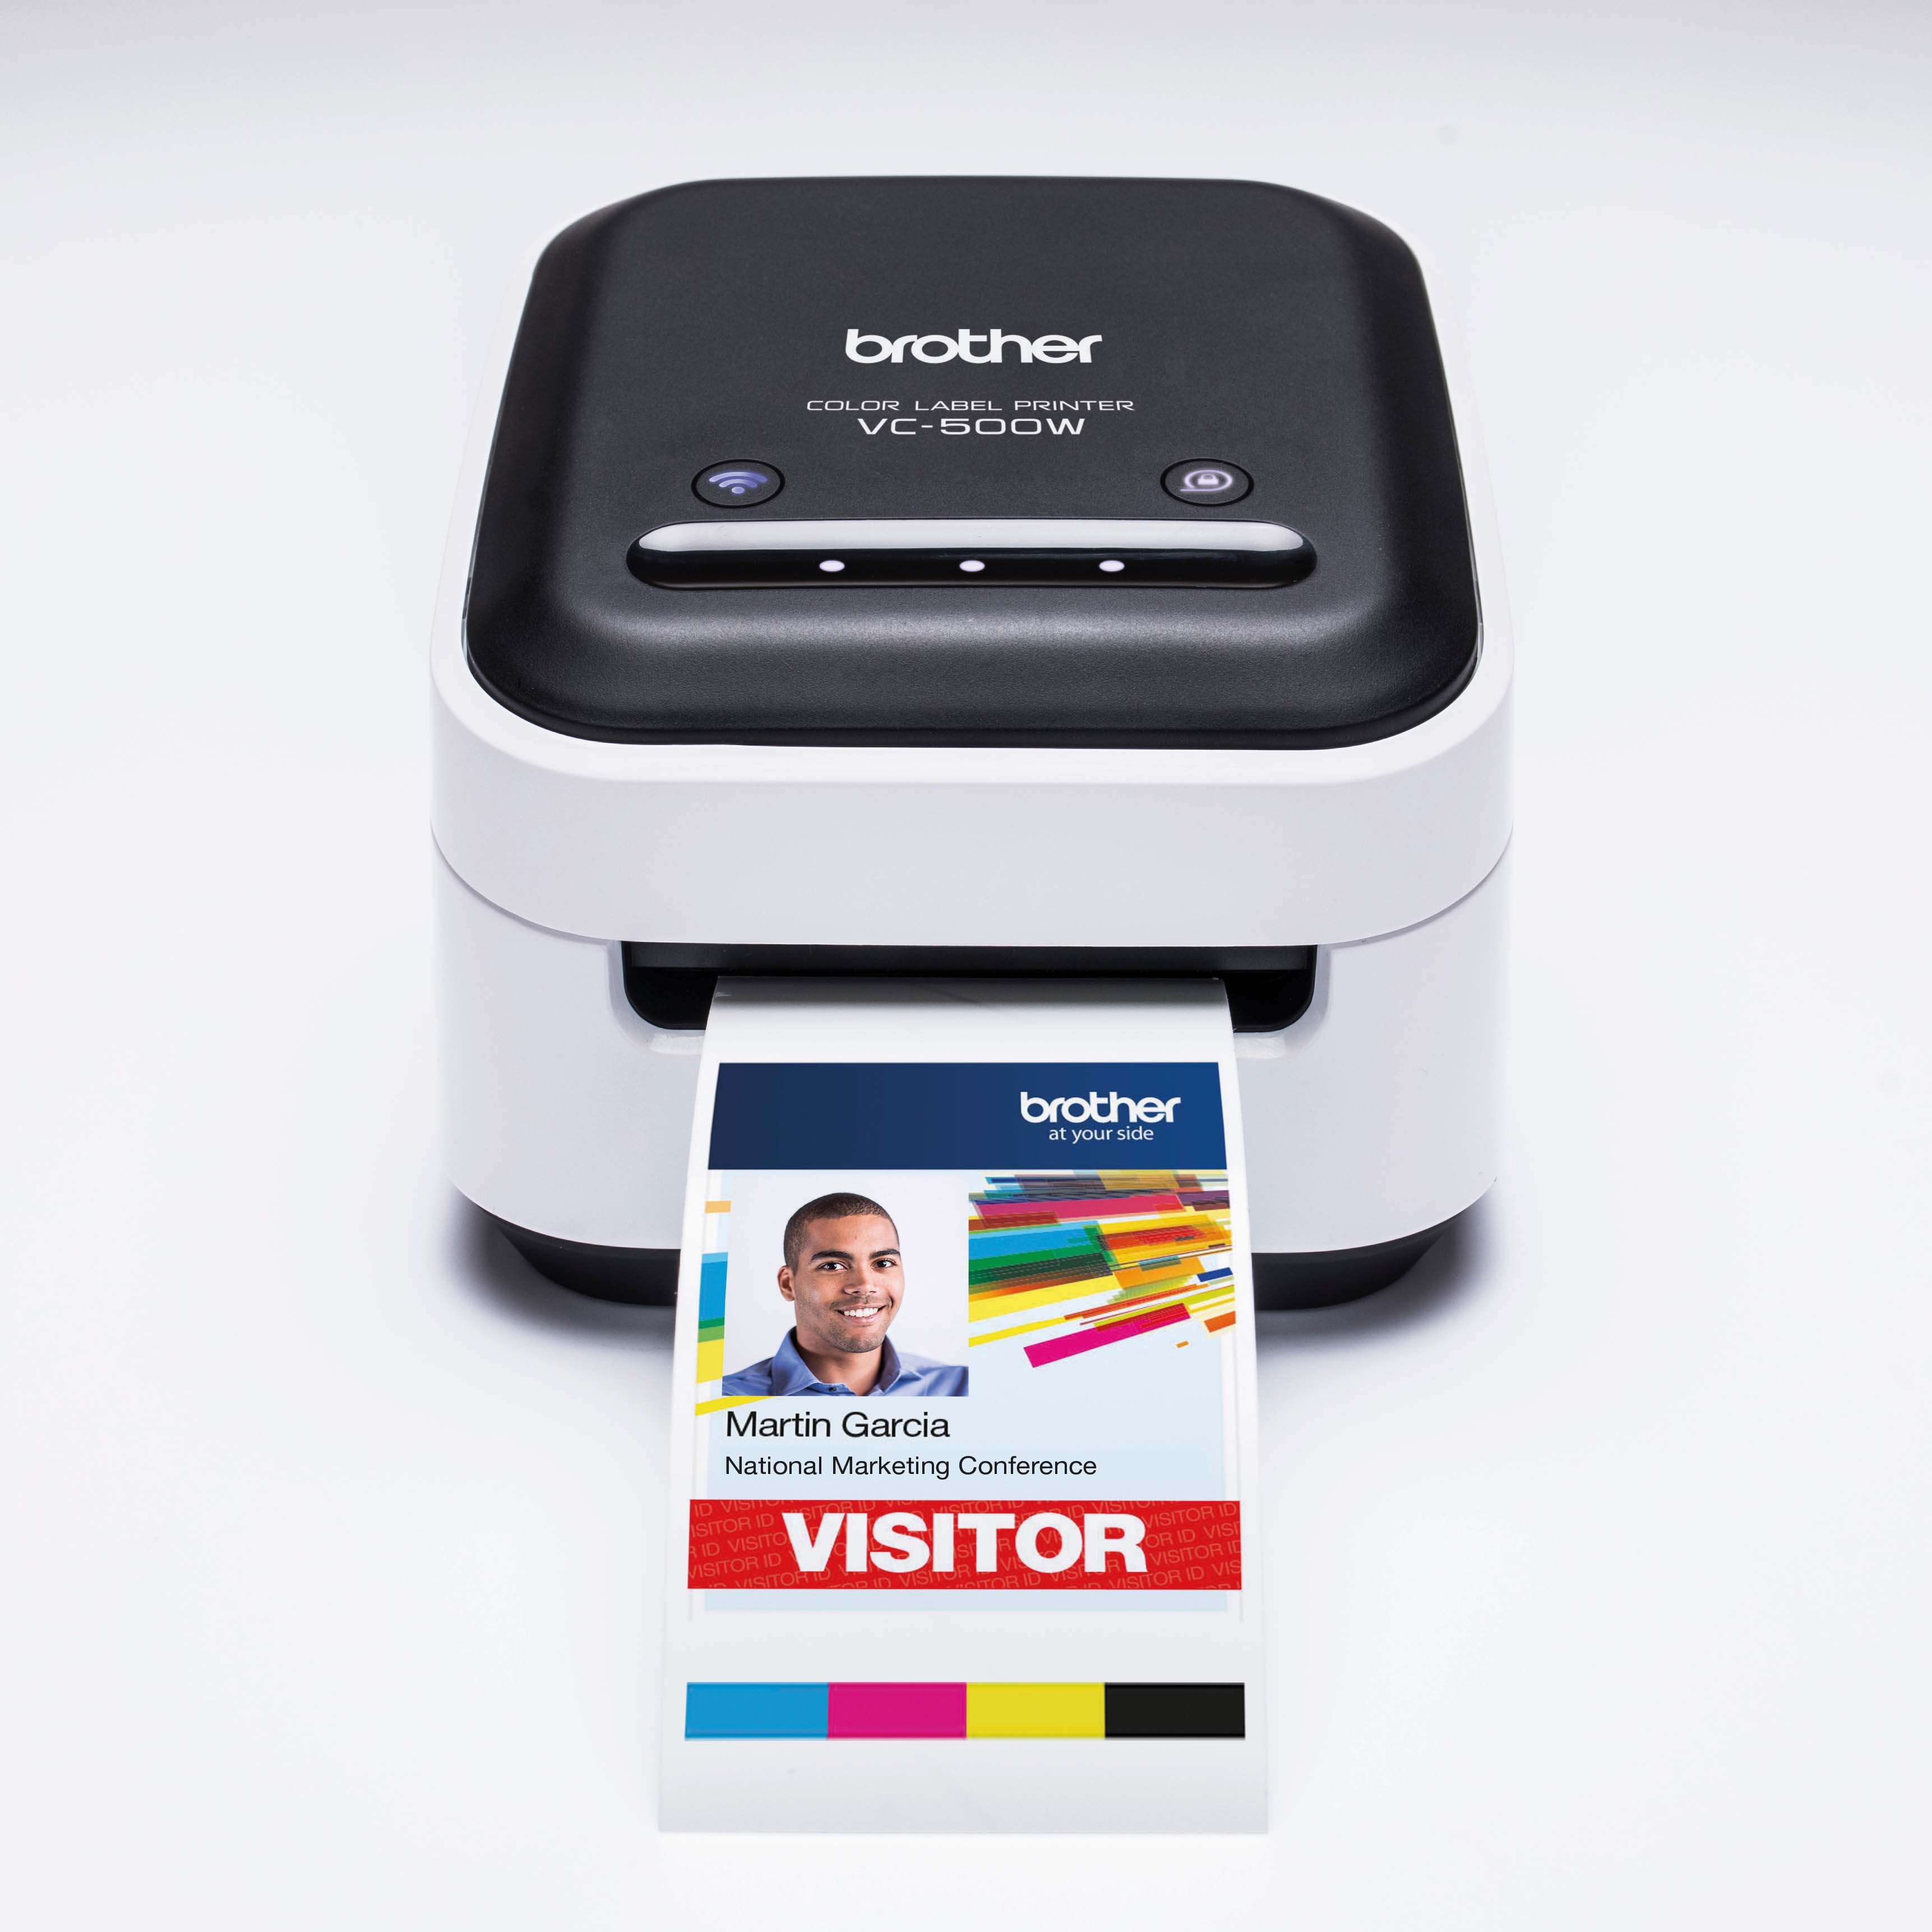 Brother VC-500W Colour Label Printer